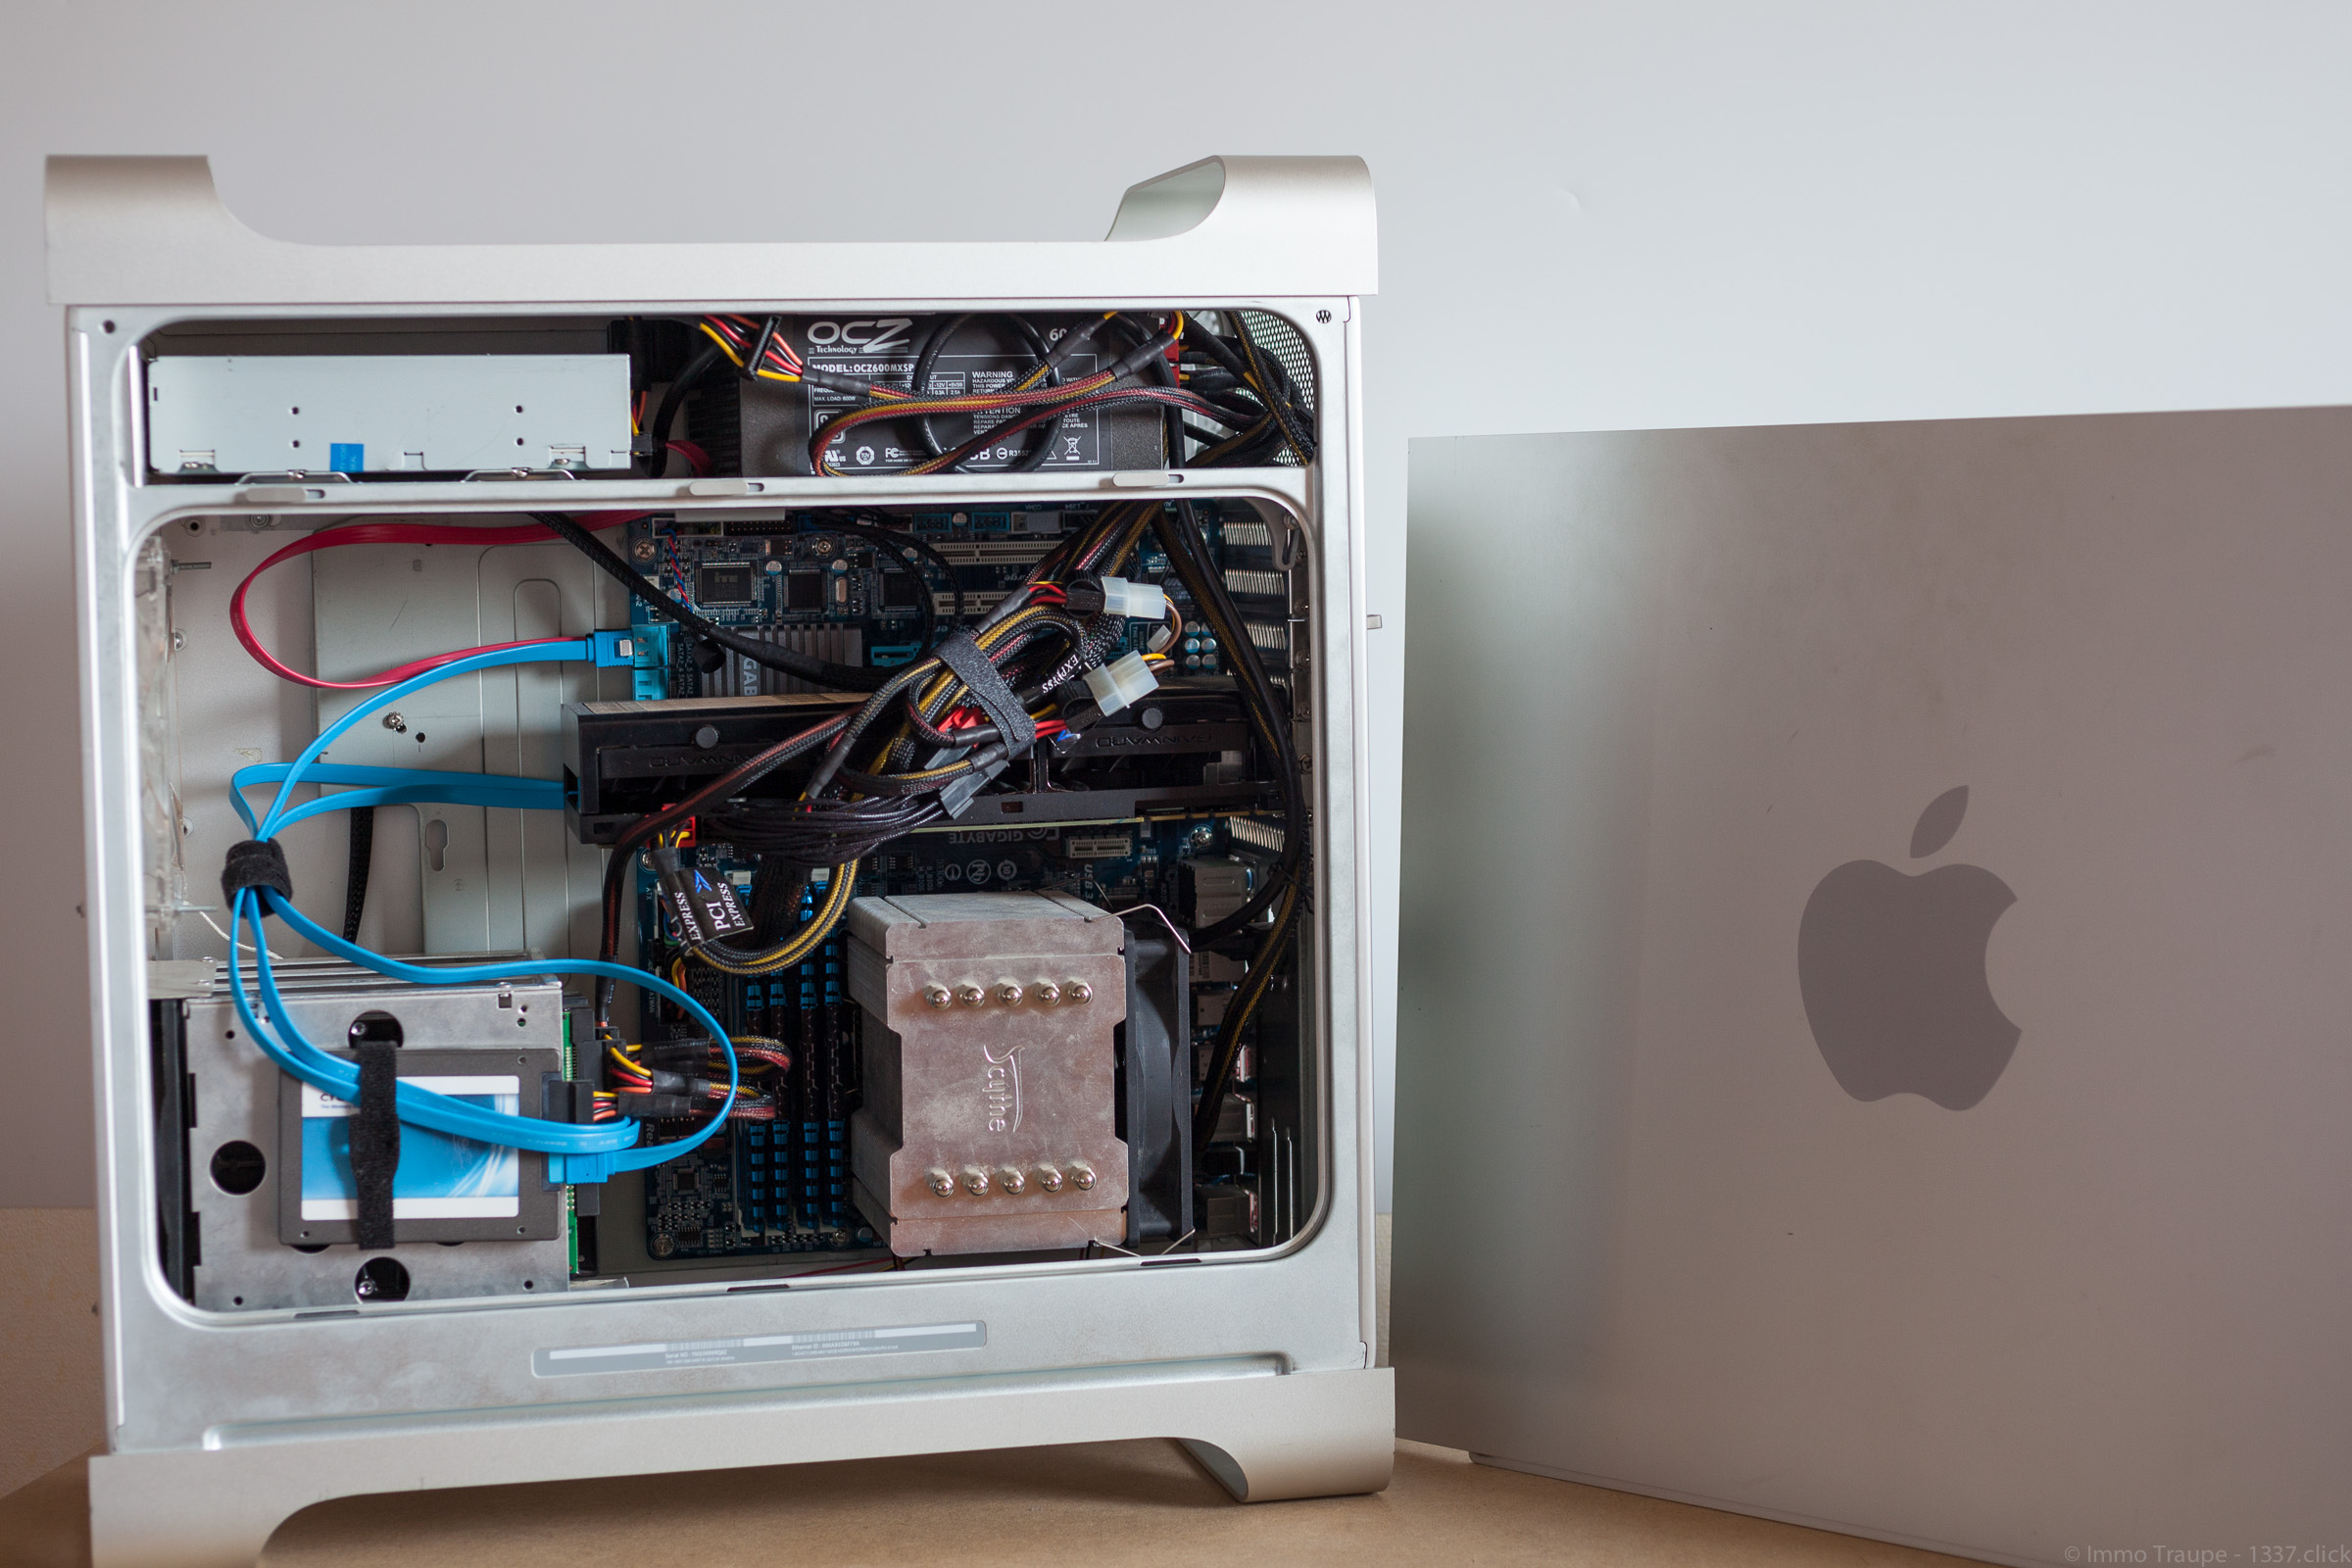 power mac g5 case